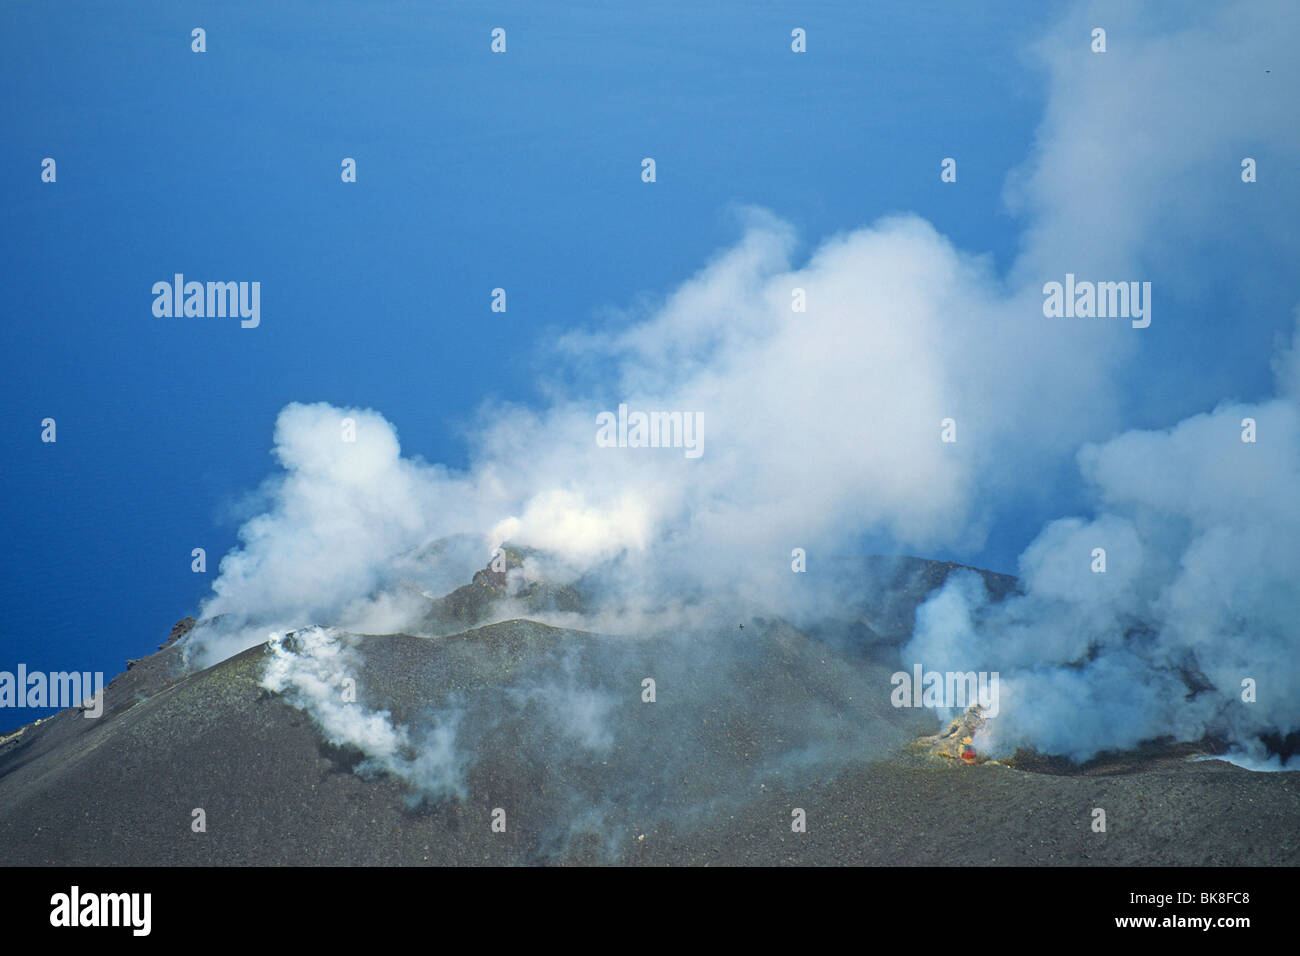 Volcanic landscape at the summit, Stromboli vulcano, Aeolian Islands, Italy, Europe Stock Photo